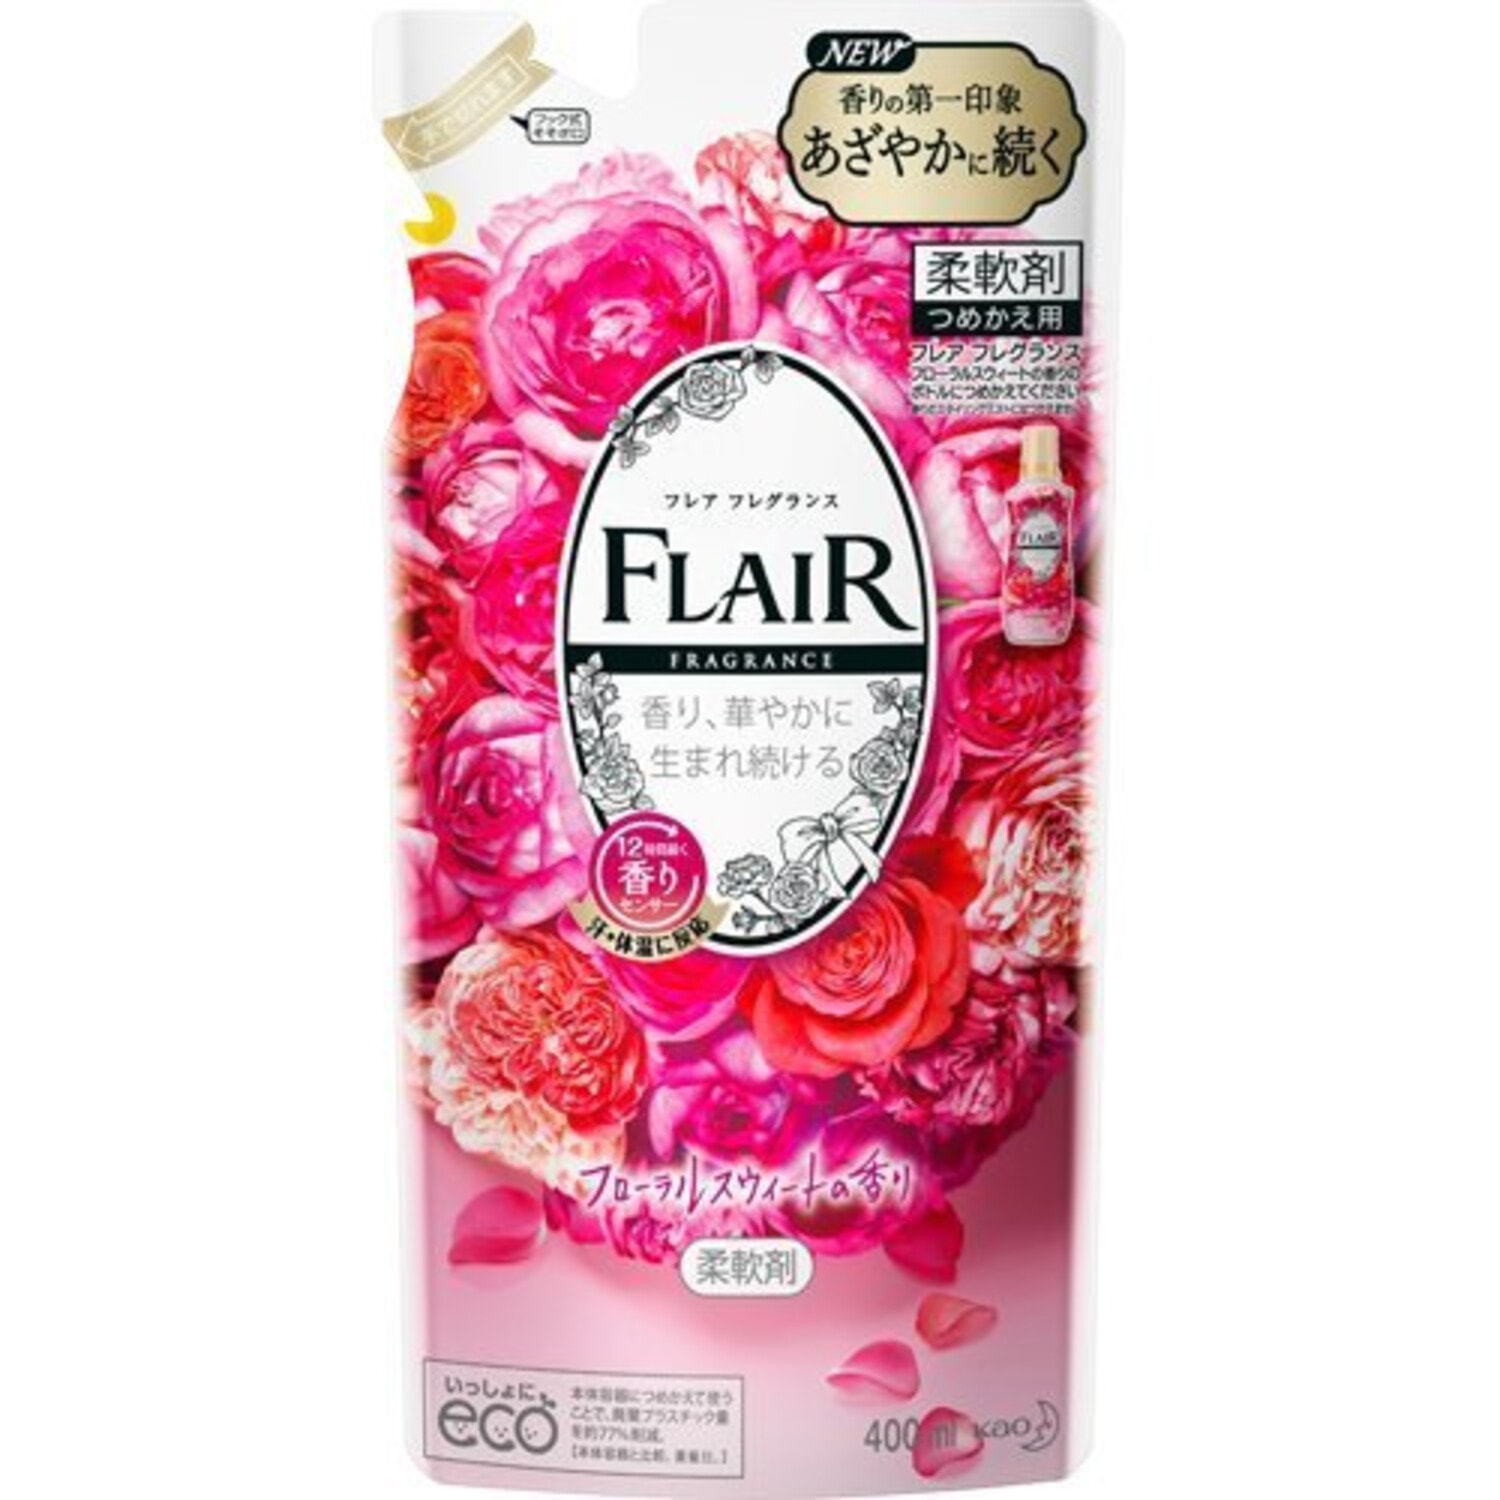 KAO Flair Fragrance Floral Sweet Арома кондиционер для белья, аромат Сладкий цветок, (сменная упаковка), 400 мл. / 377432